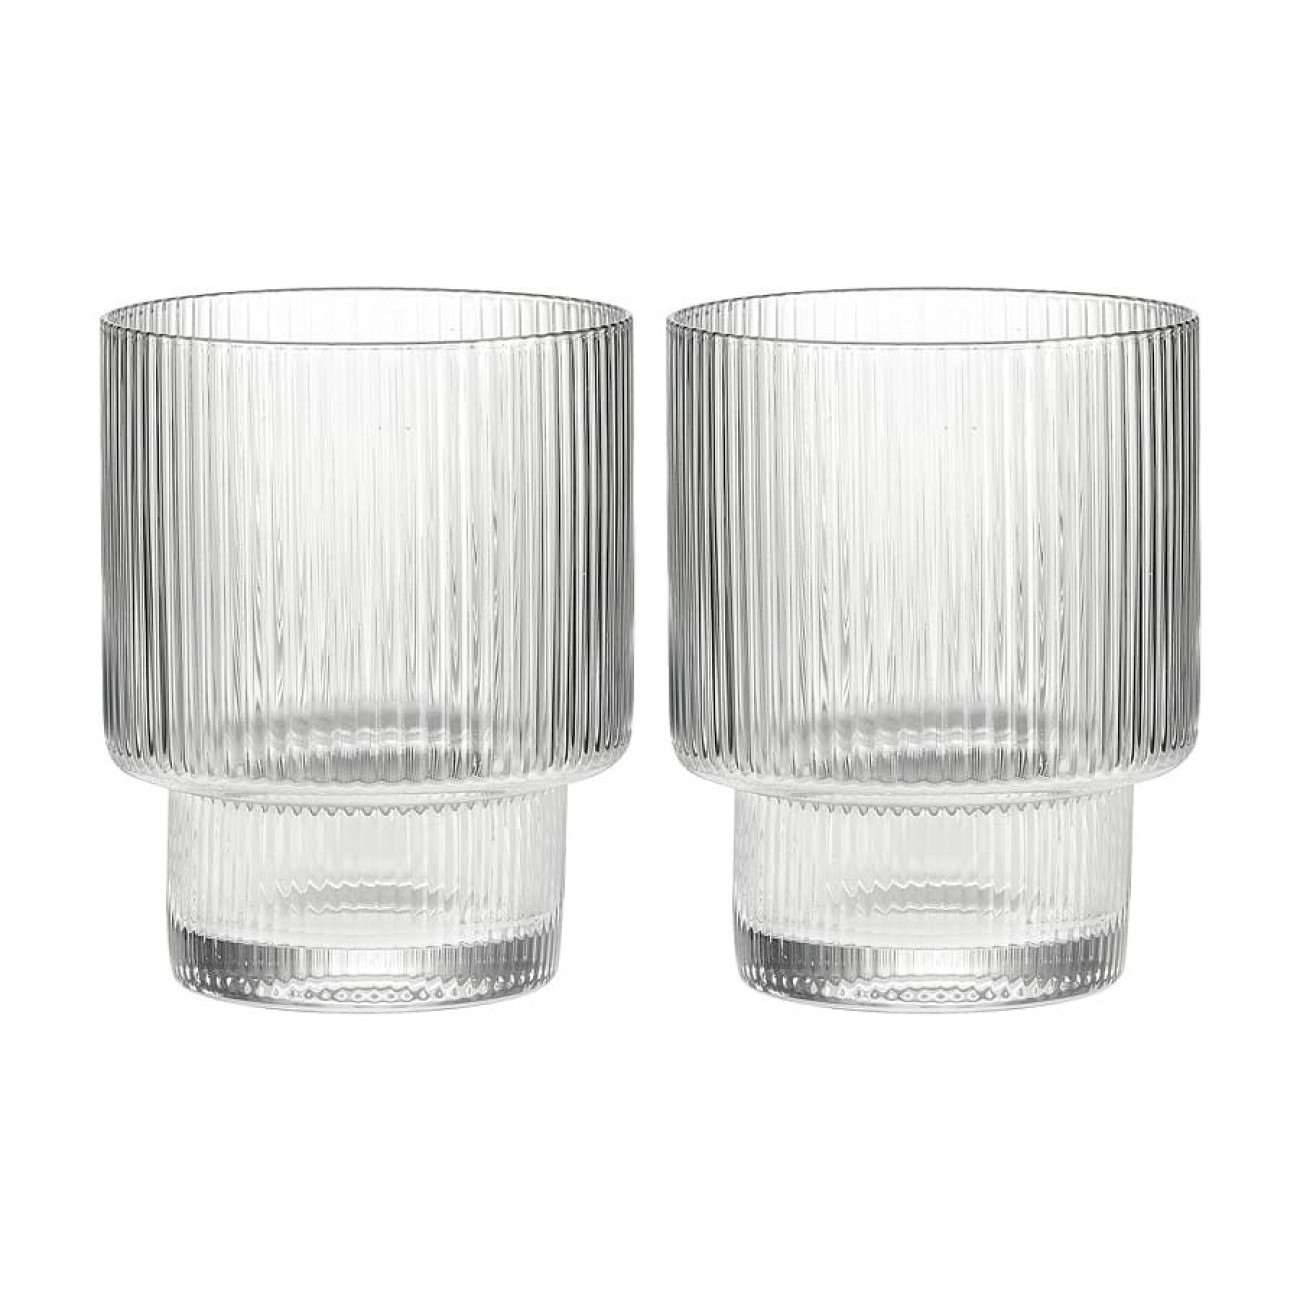 Набор стаканов Pozzi Milano 1876 Modern classic для воды прозрачный 0.32 л 2 предмета набор стаканов luminarc rosh lm 450 мл 3 шт